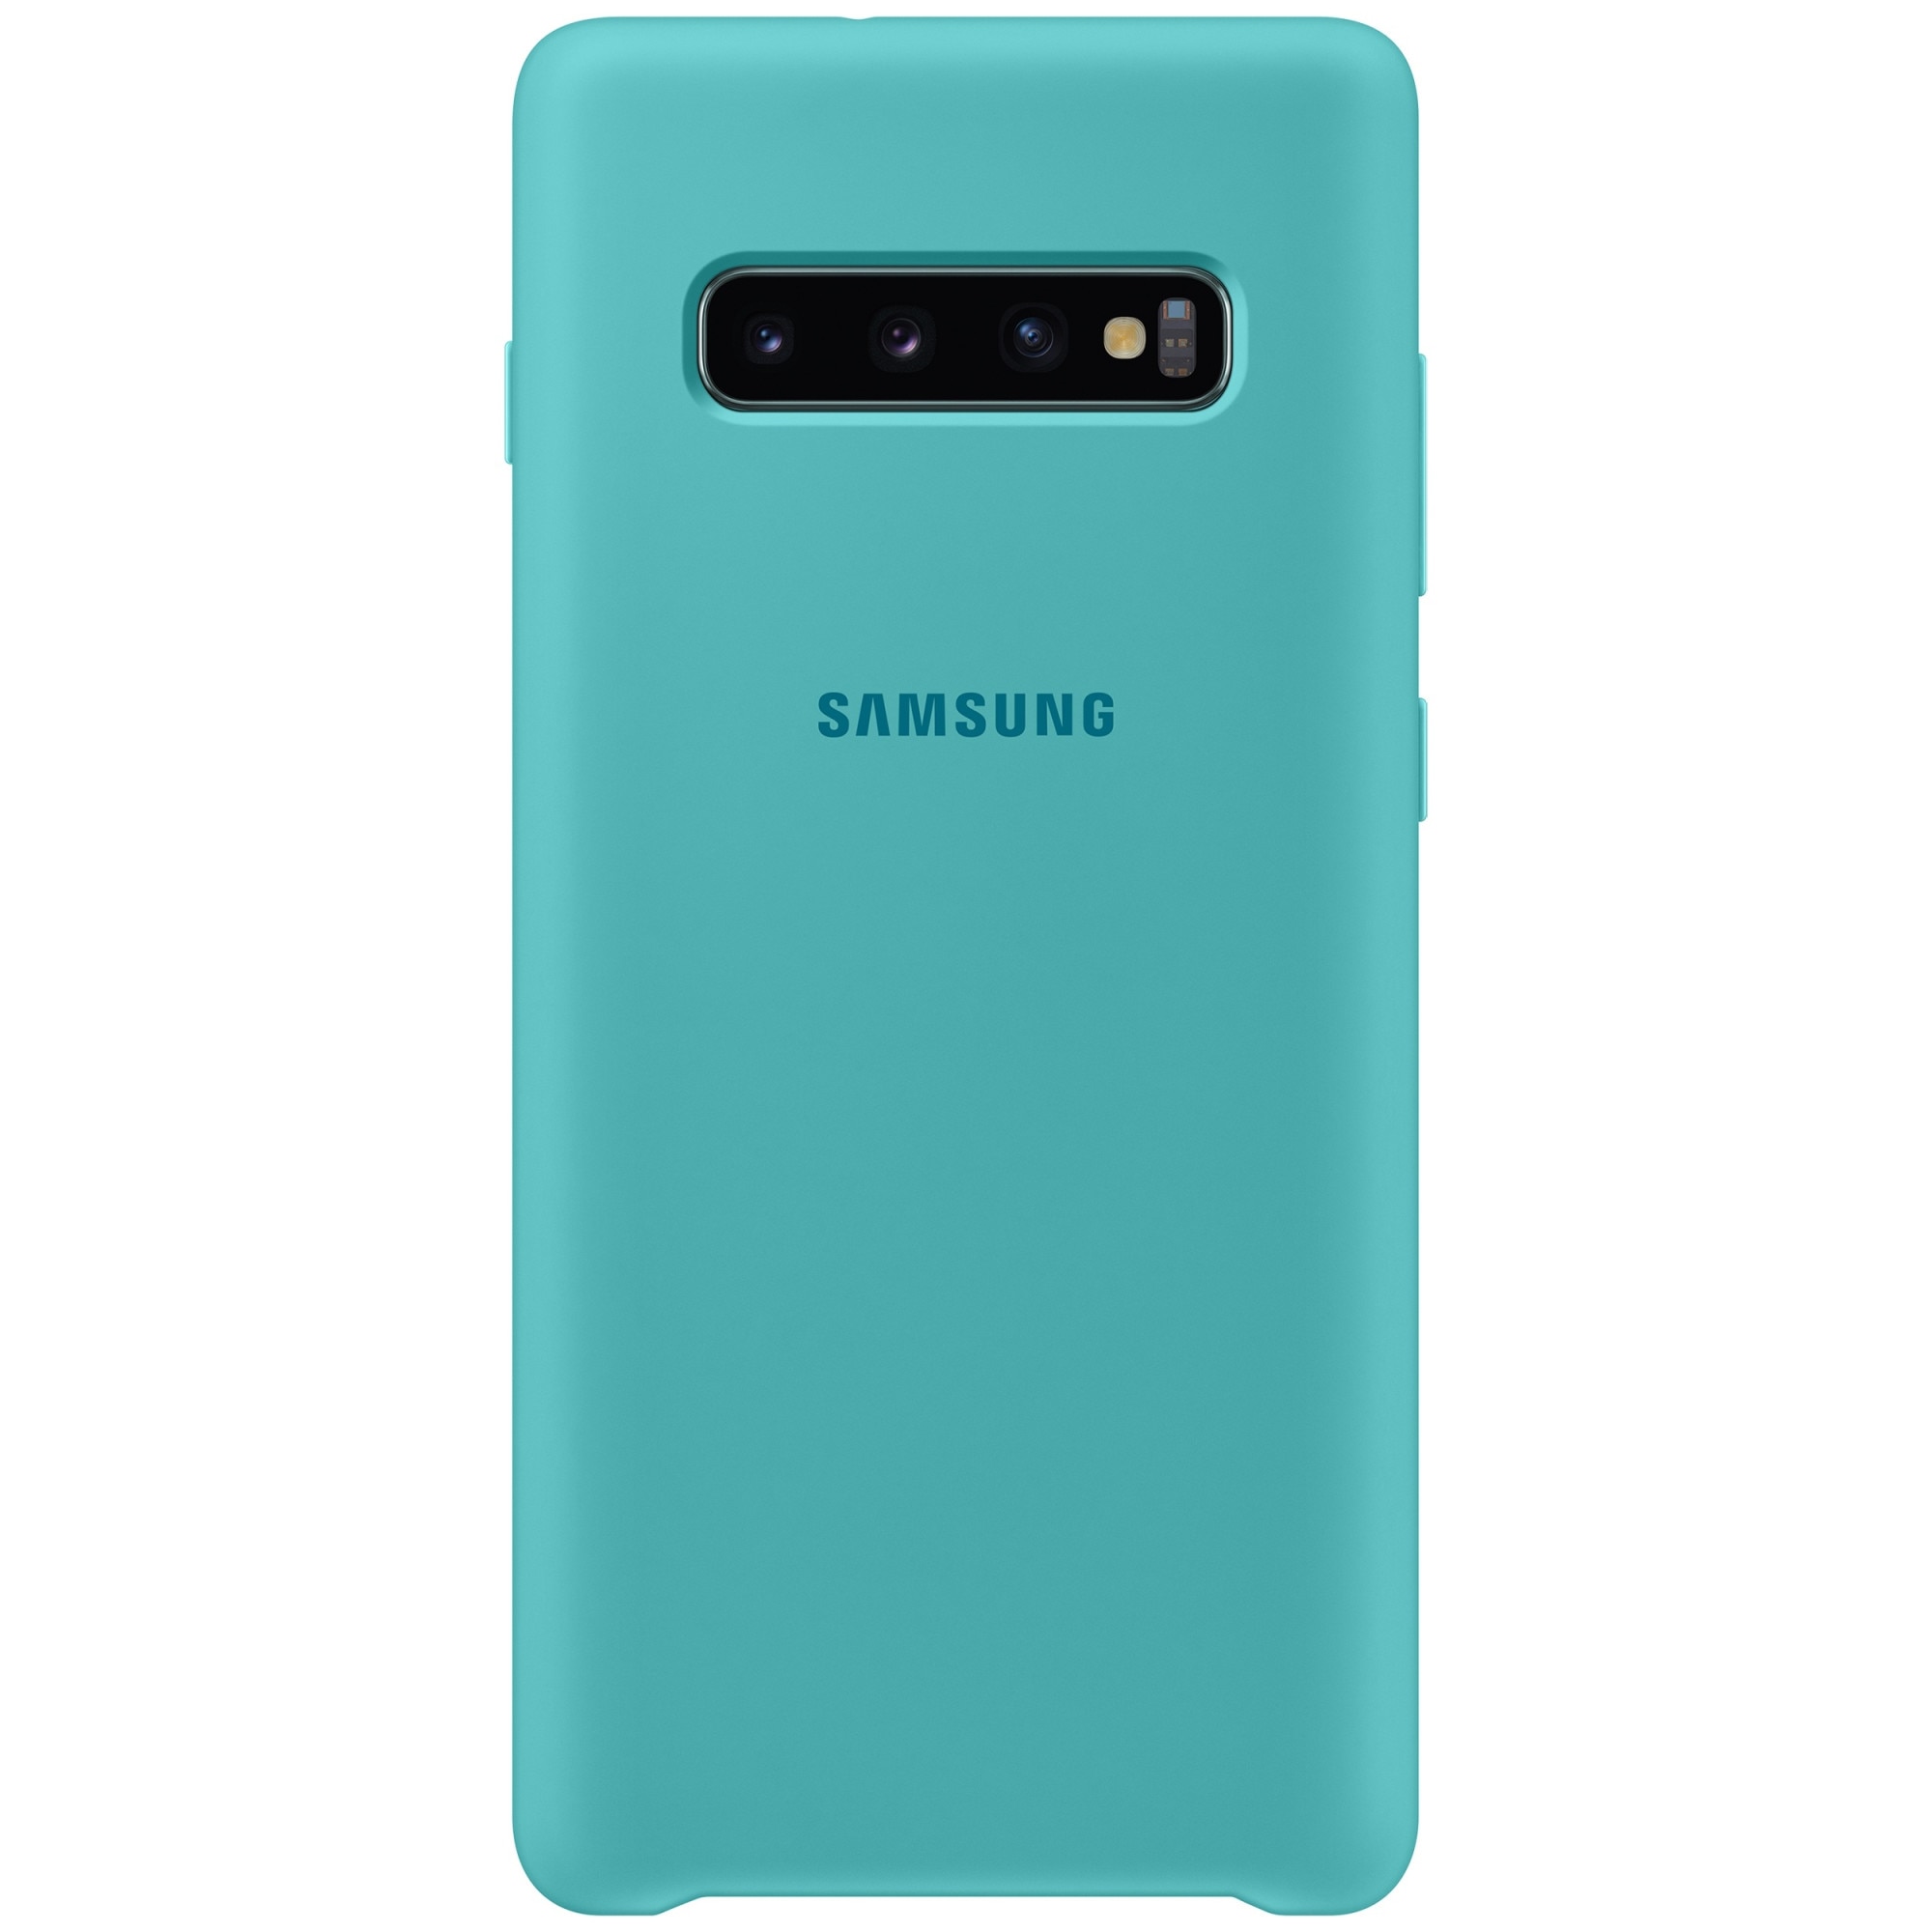 Samsung Galaxy Note 10 Silicone Cover